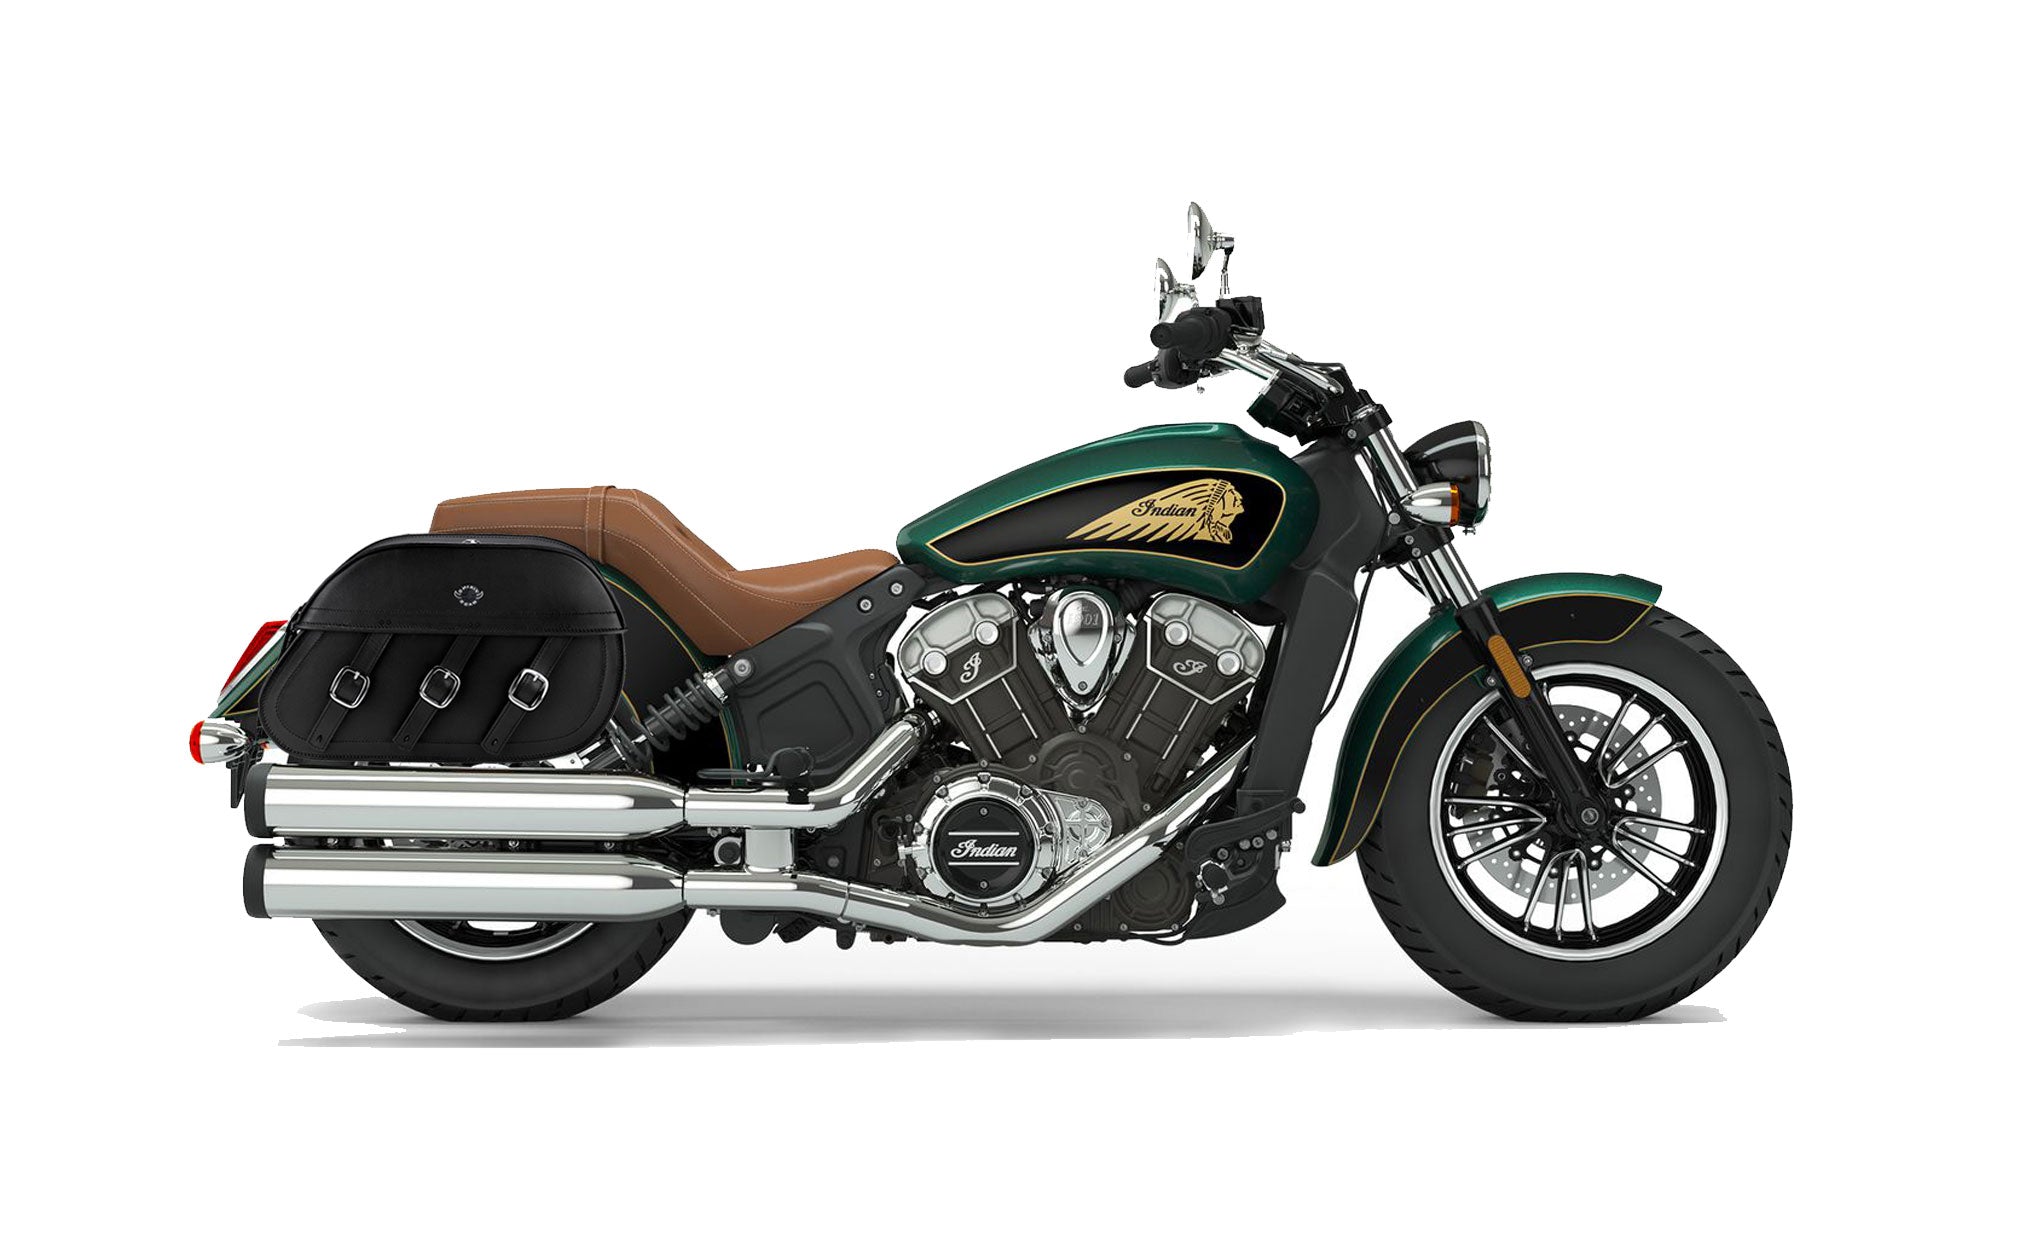 Viking Trianon Extra Large Indian Scout Leather Motorcycle Saddlebags on Bike Photo @expand